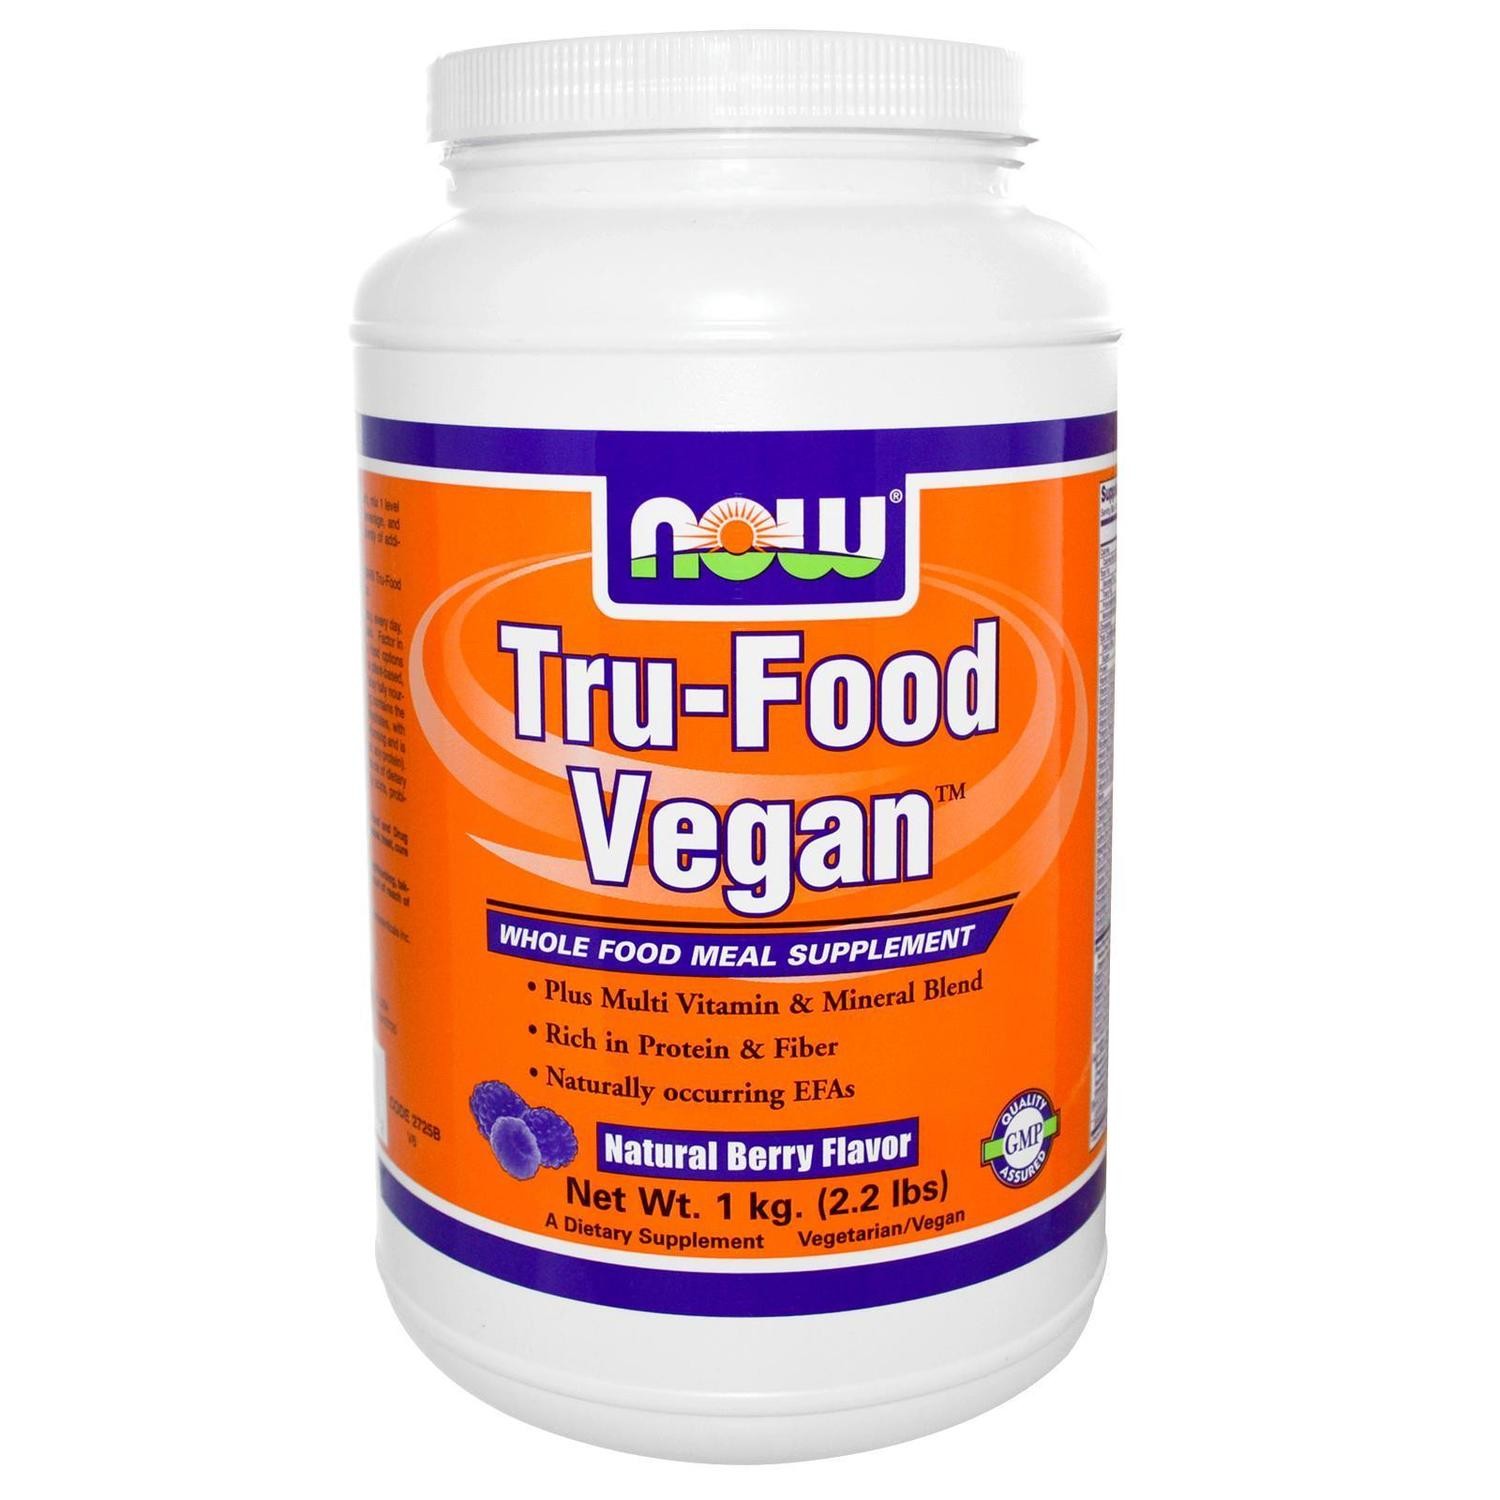 Tru-Food Vegan Natural Berry Flavor - 2.2 lbs.